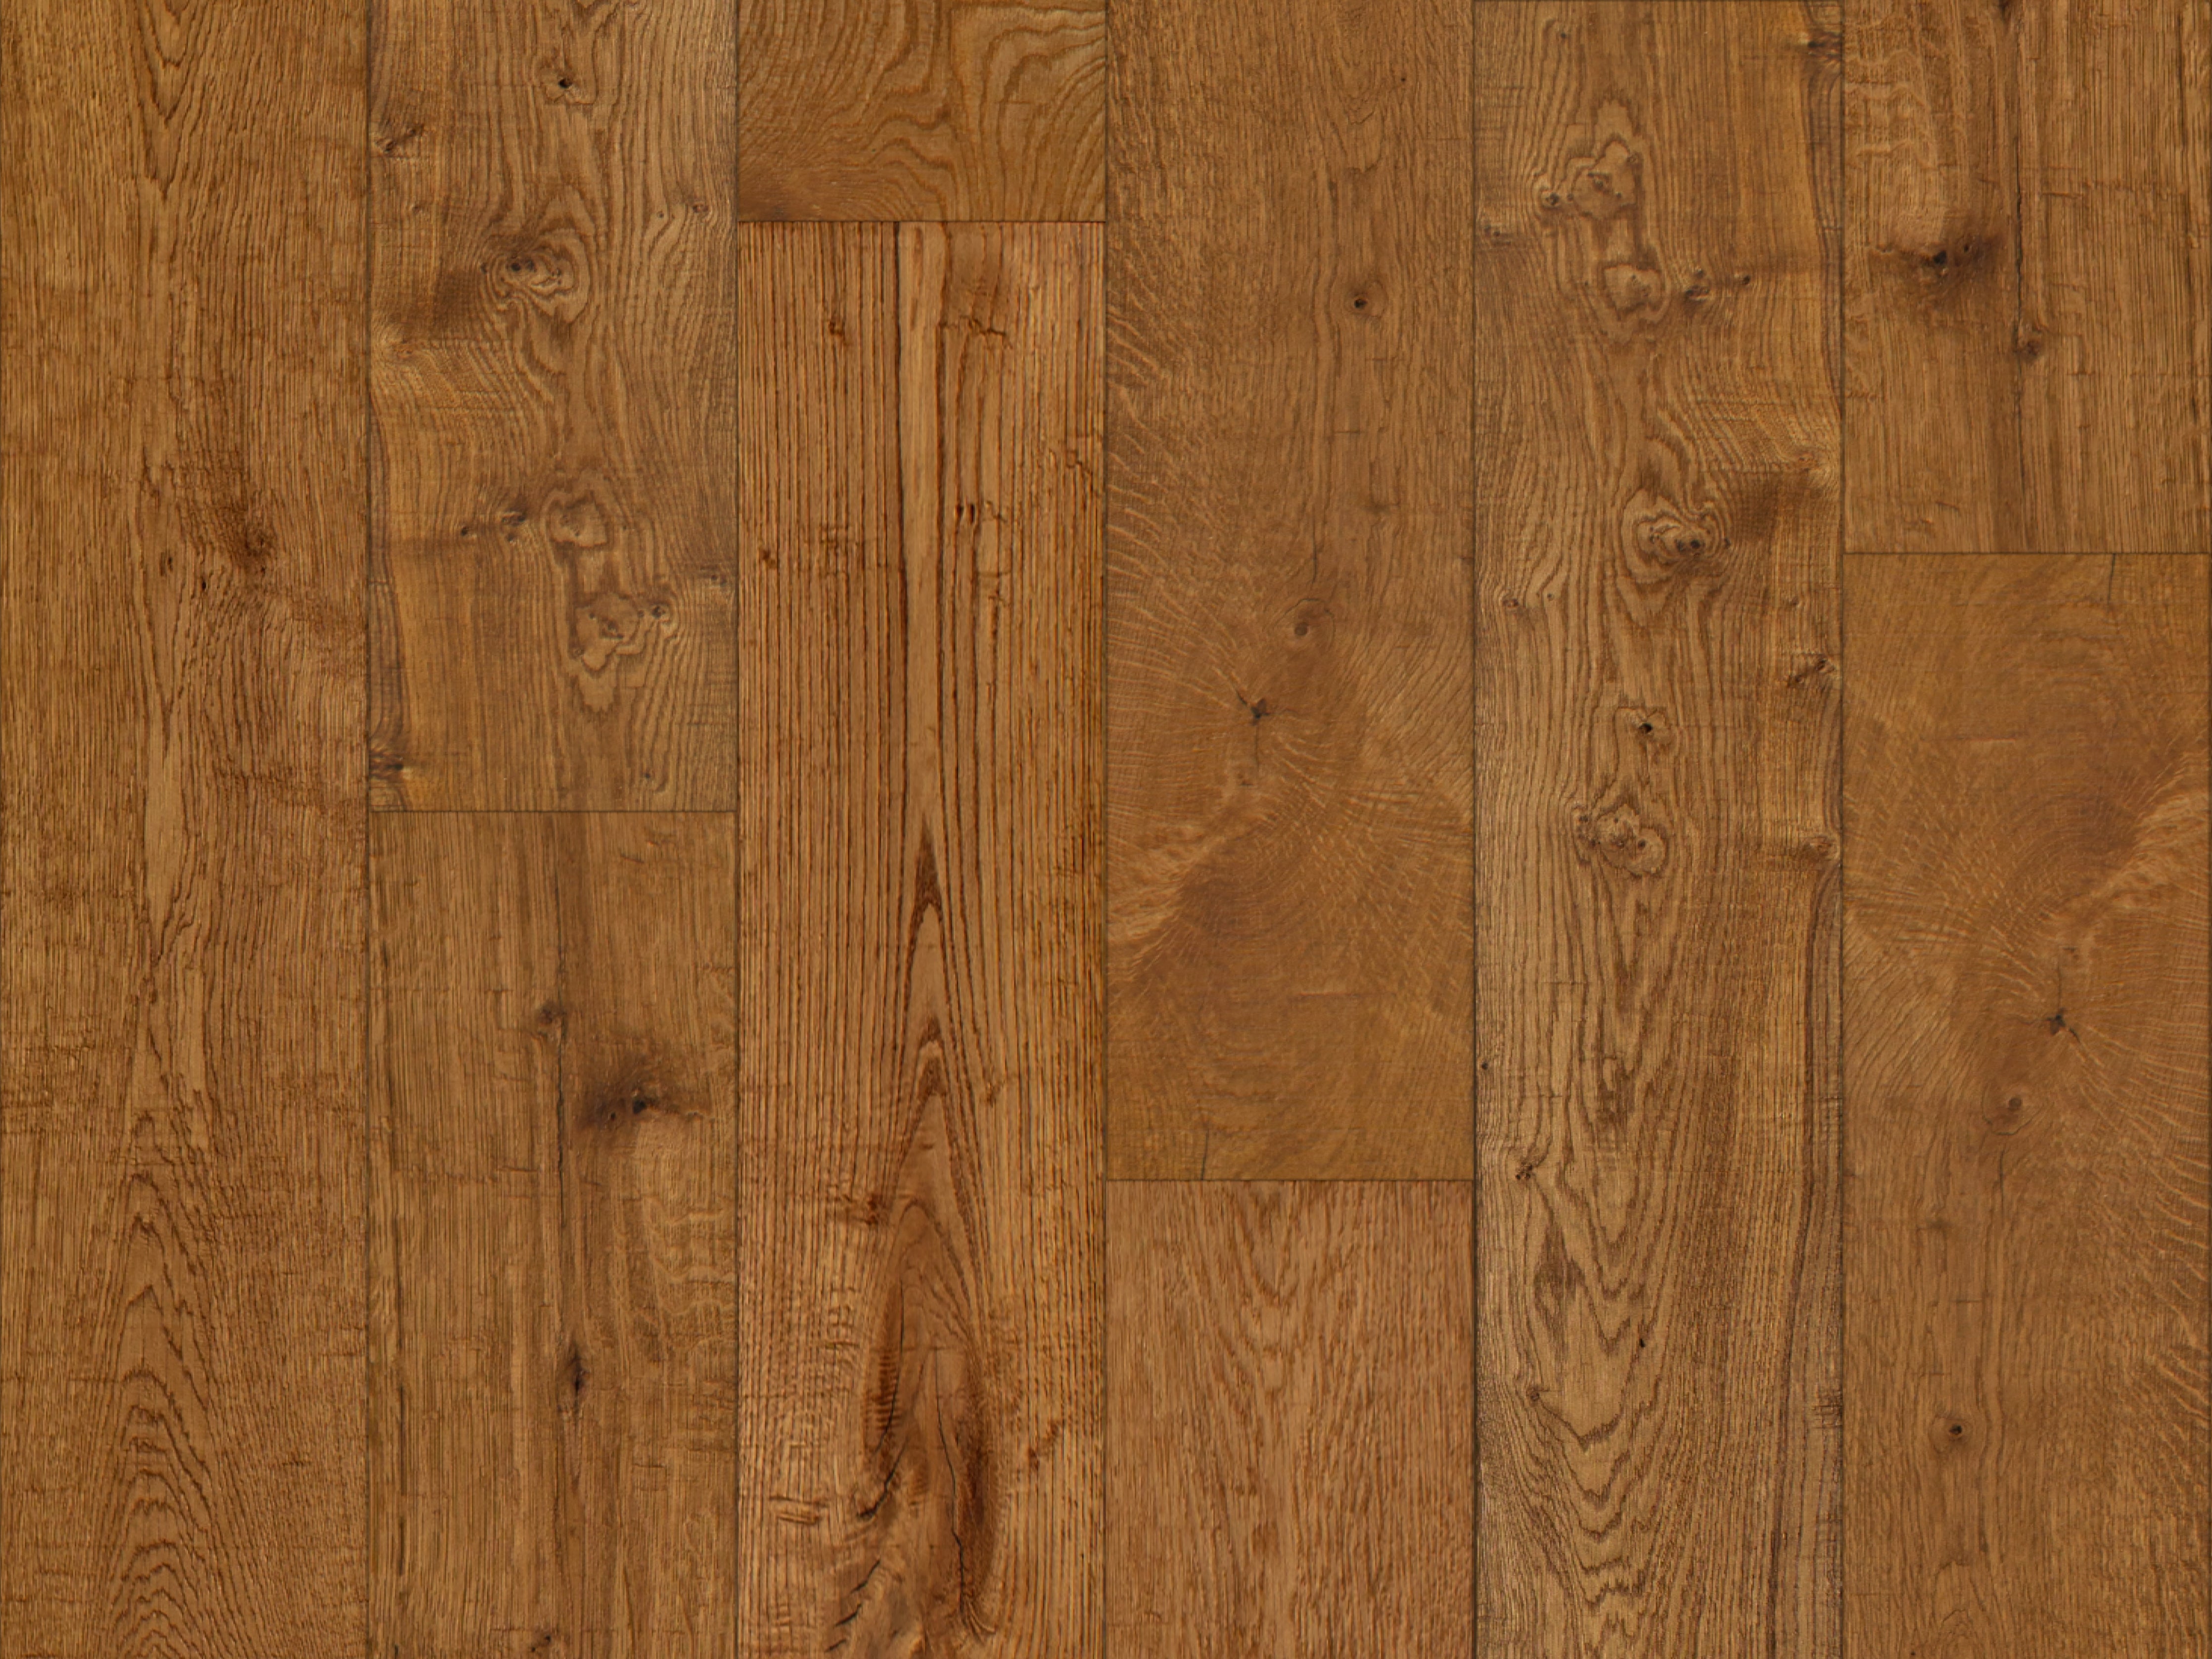 duchateau signature strata flint european oak engineered hardnatural wood floor hard wax oil finish for interior use distributed by surface group international